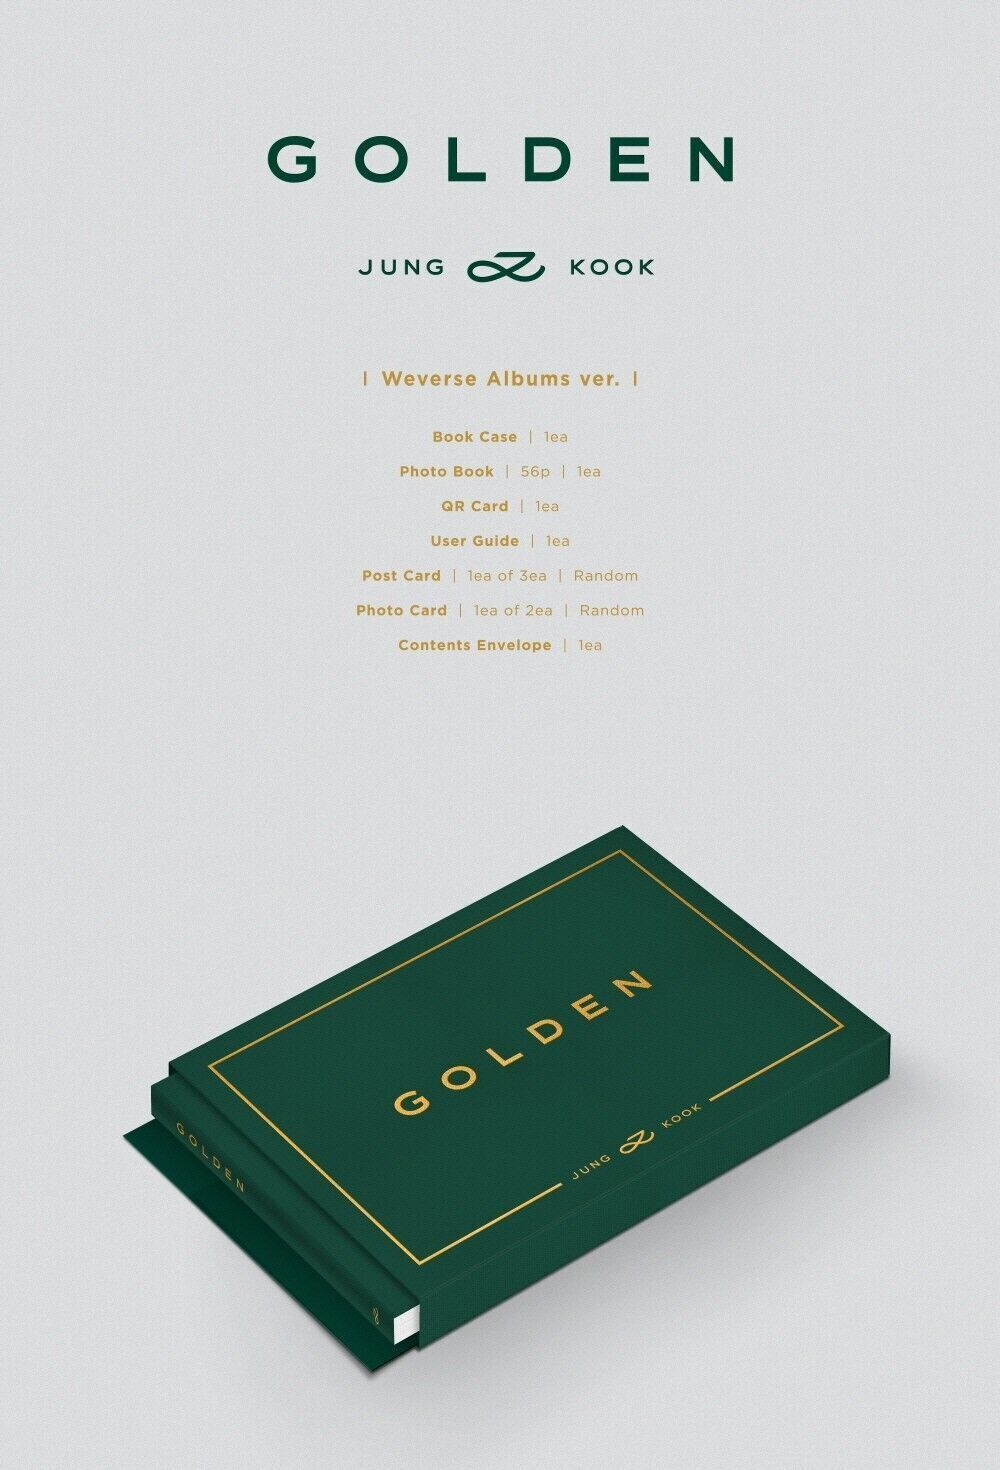 JUNGKOOK BTS - GOLDEN (Weverse Albums ver.)